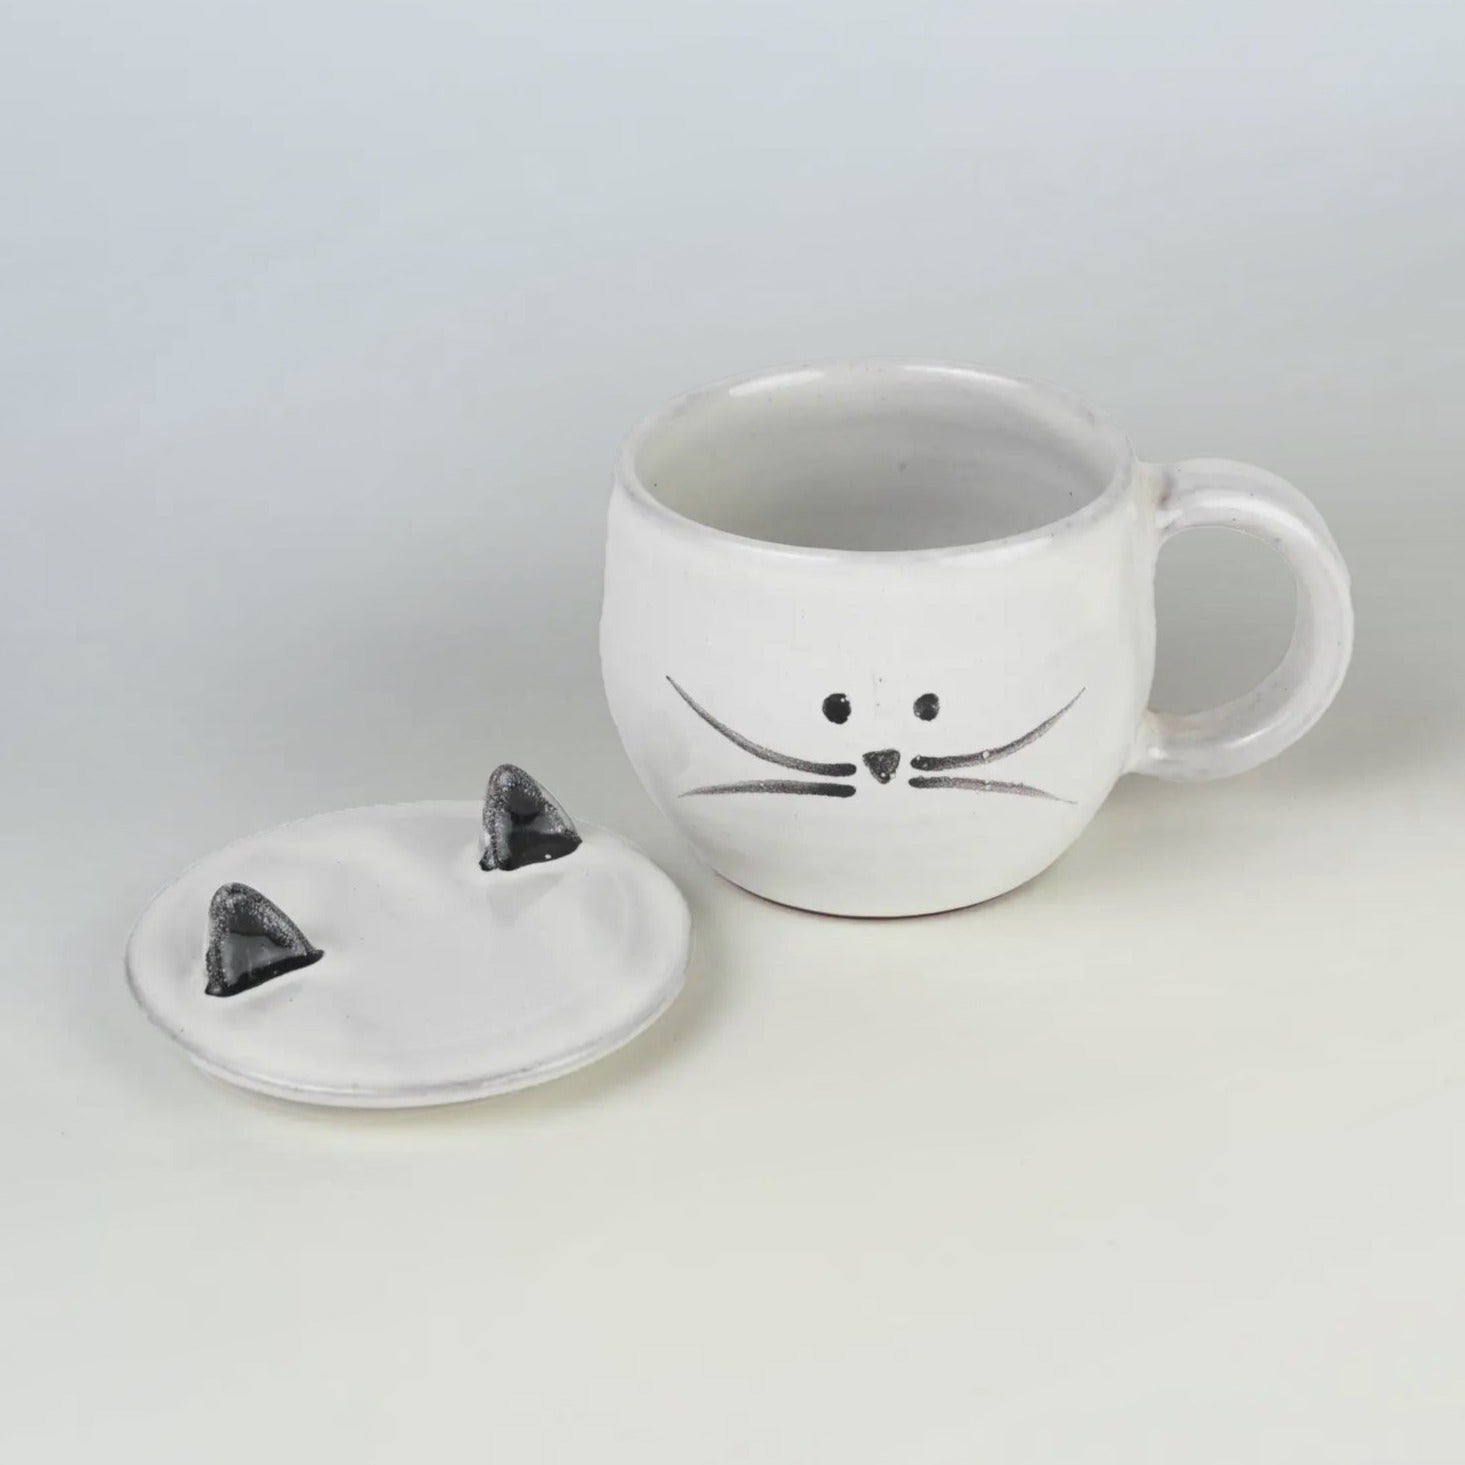 Cute cat mug with lid, kitty ears